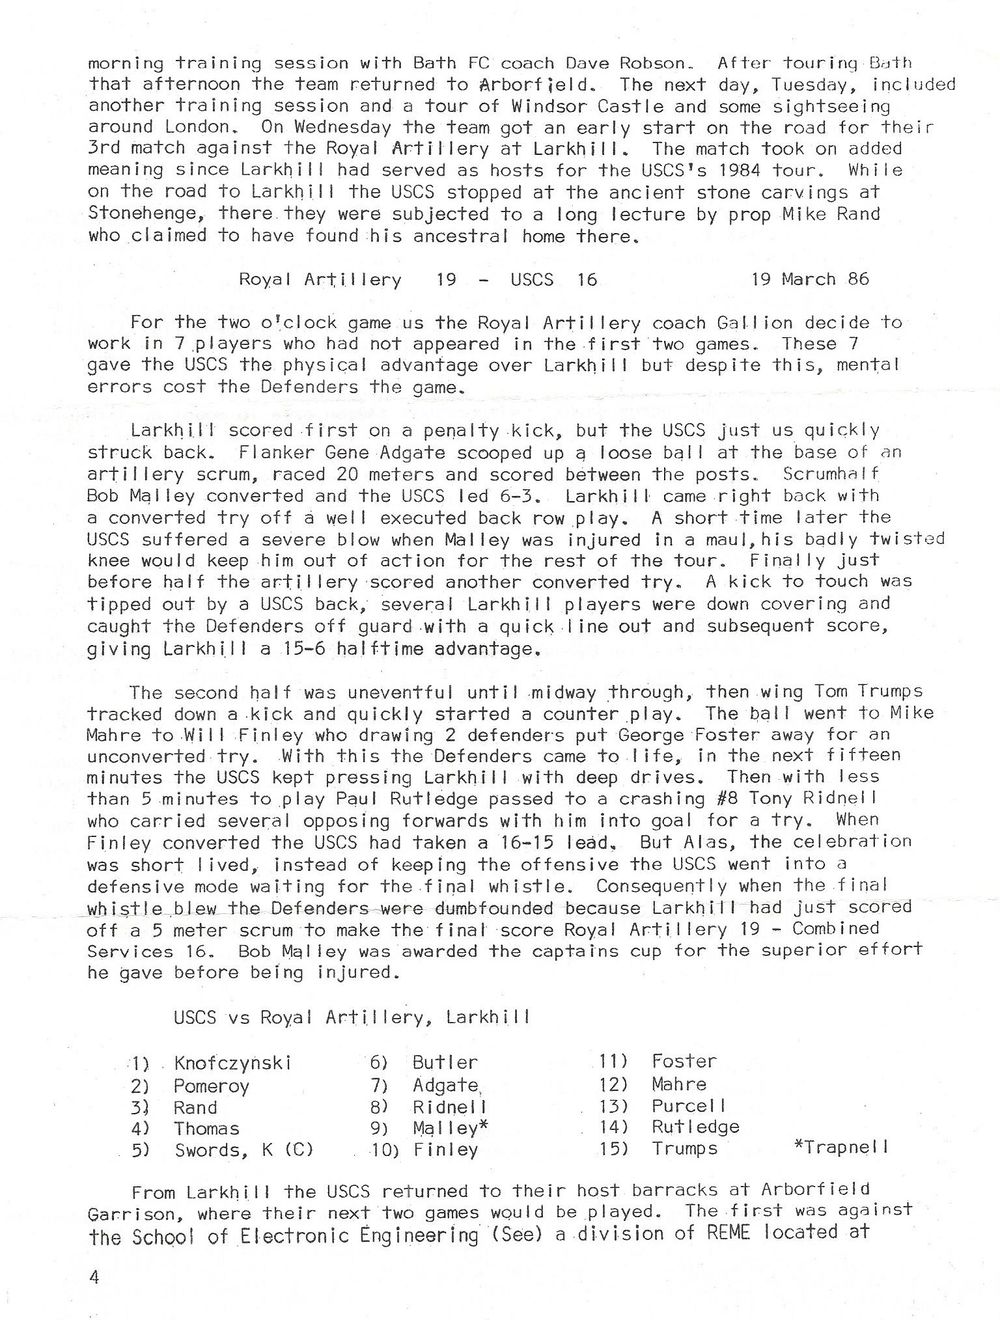 1986 CS Tour Report 4.jpg